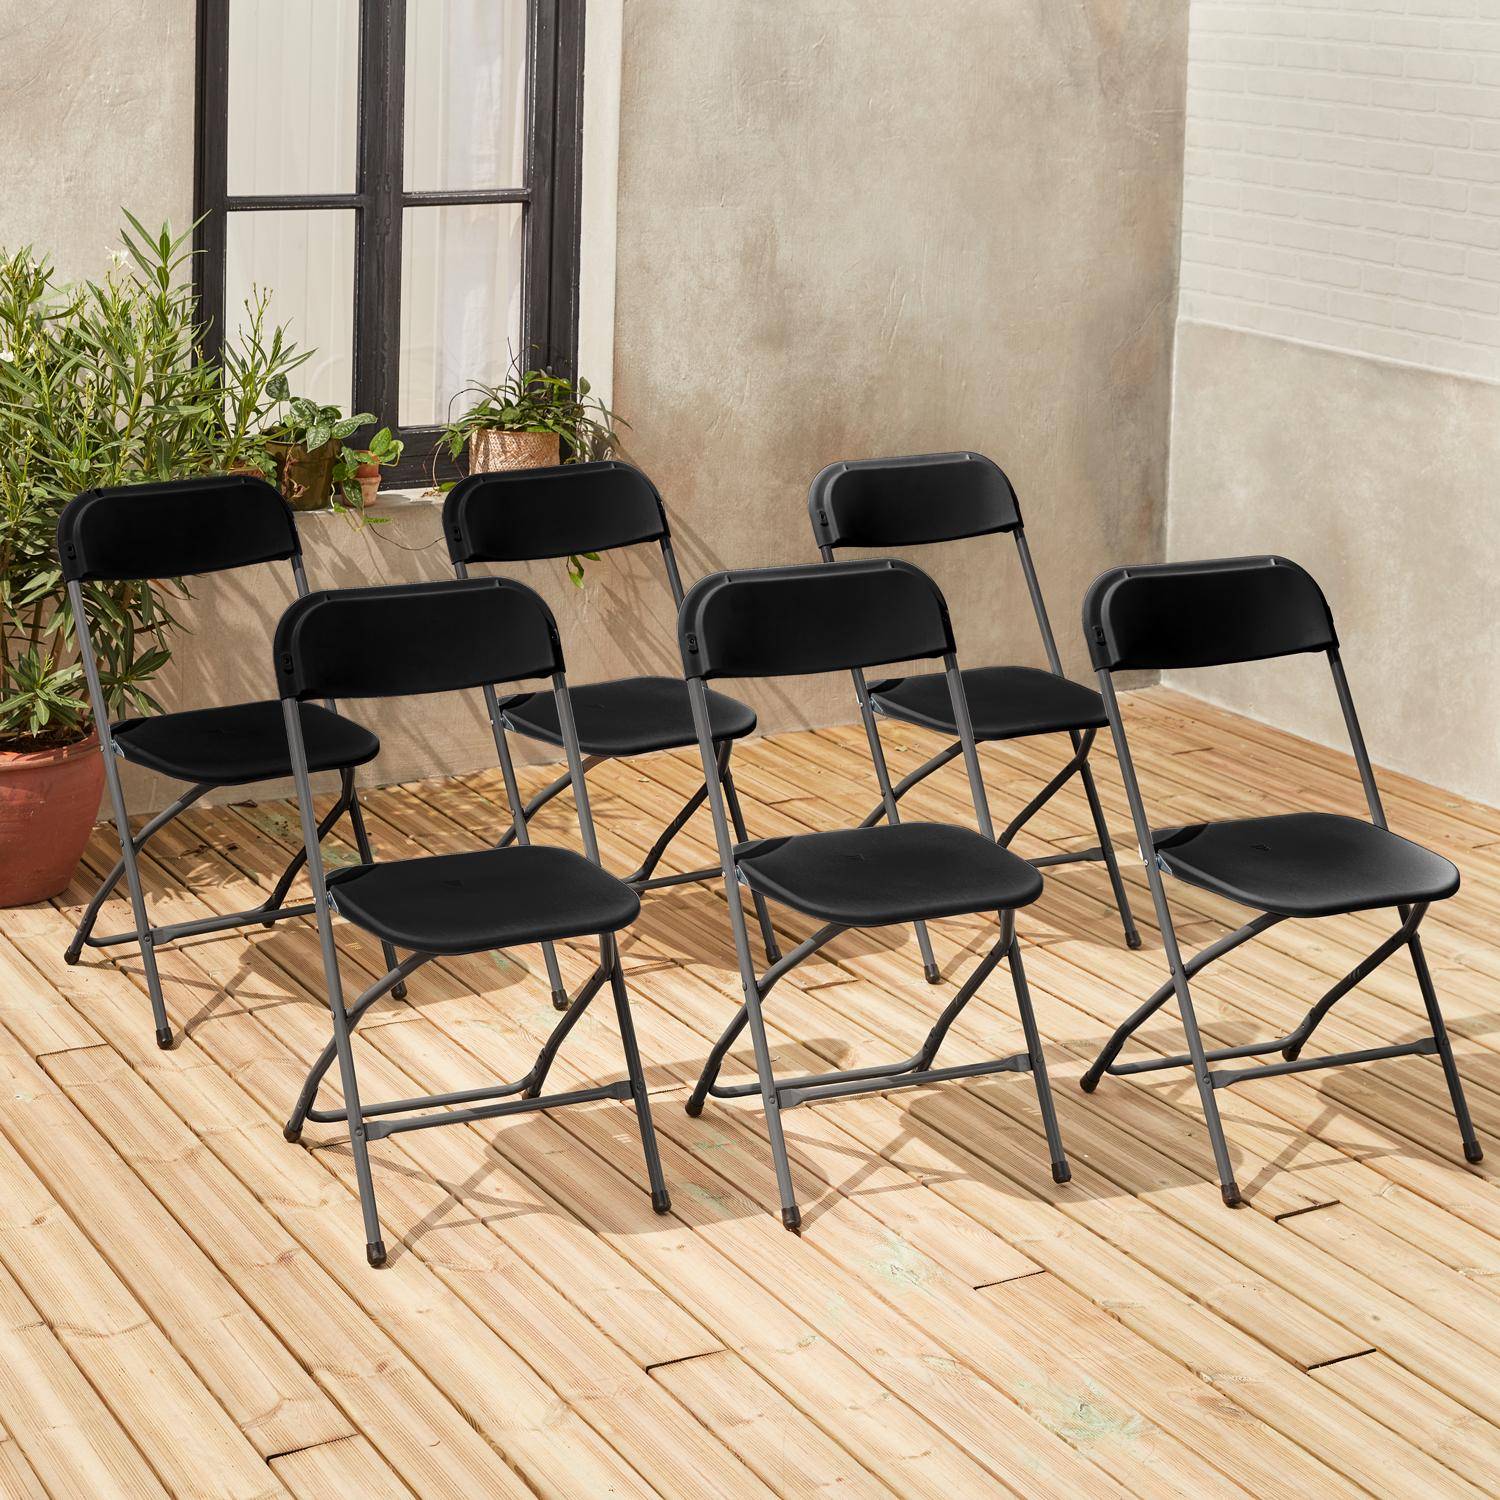 Set of 6 Folding Reception Chairs, grey Photo1